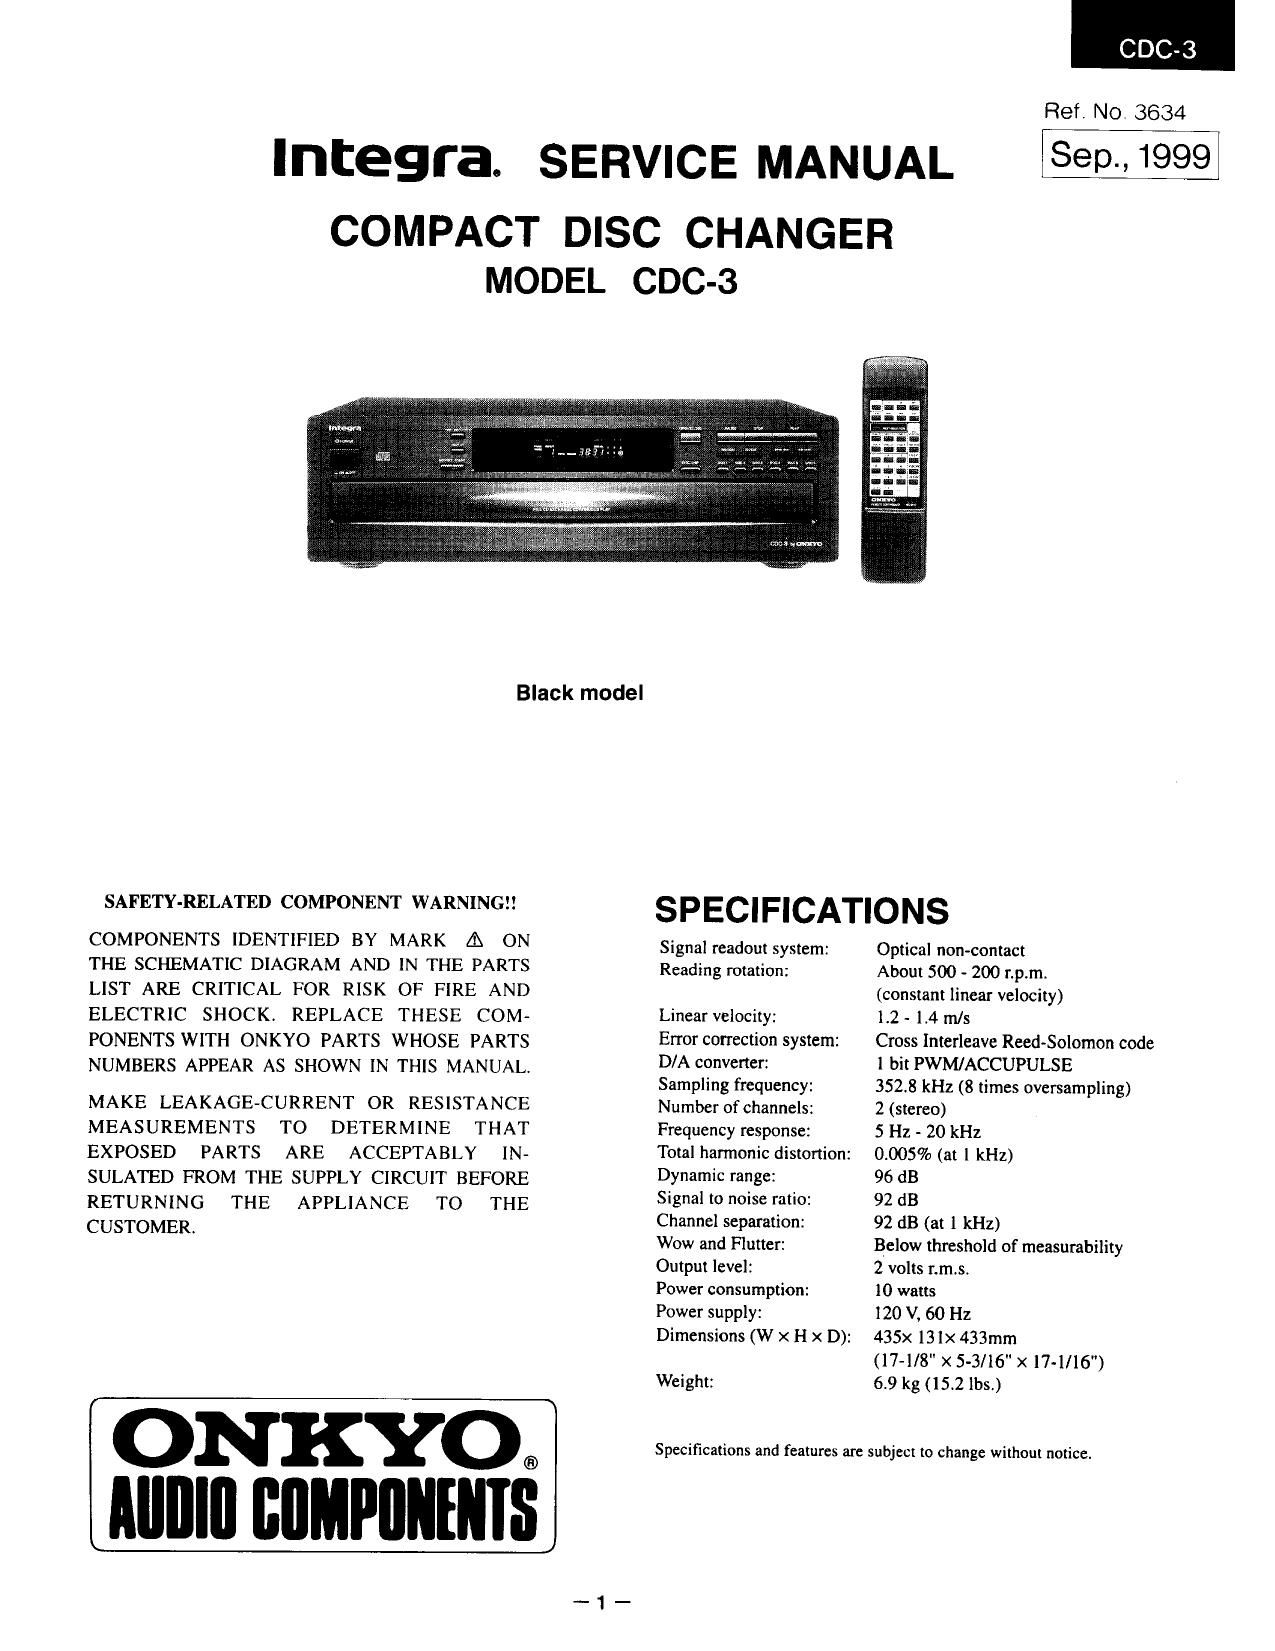 Onkyo CDC 3 Service Manual